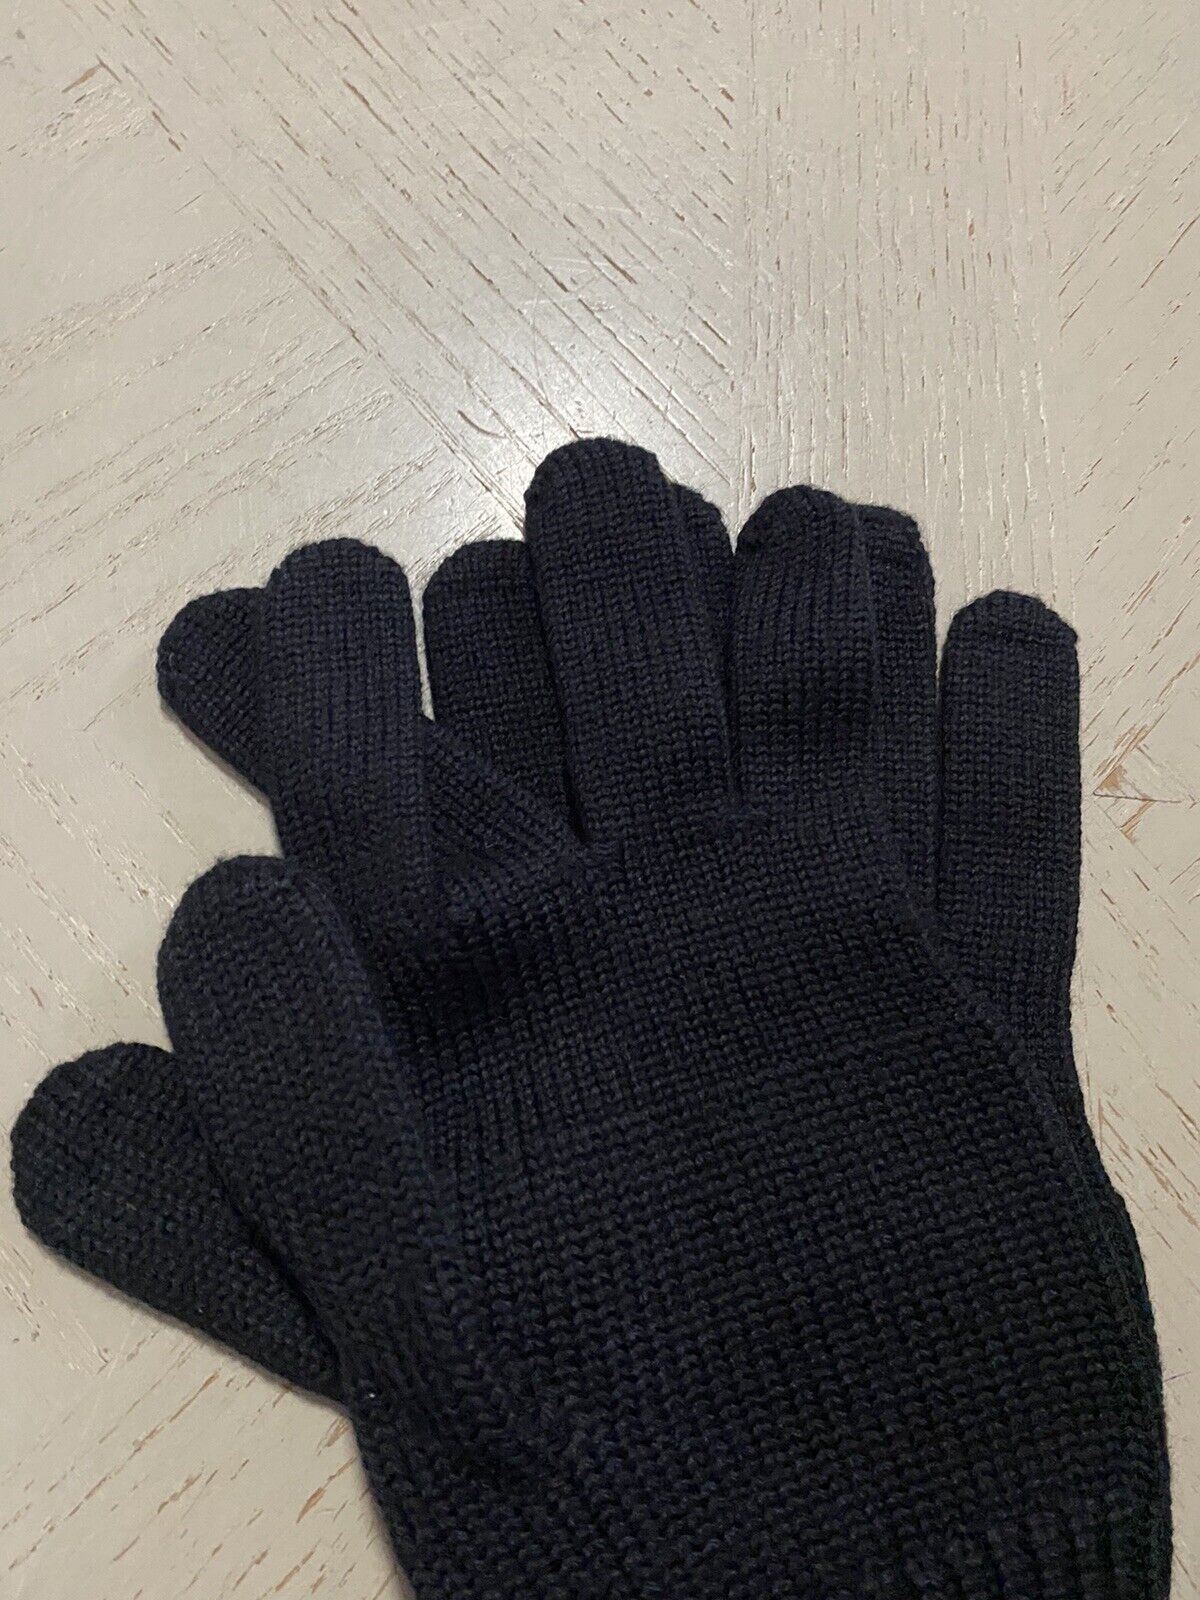 NWT Bottega Veneta Wool Gloves Black Size L Italy